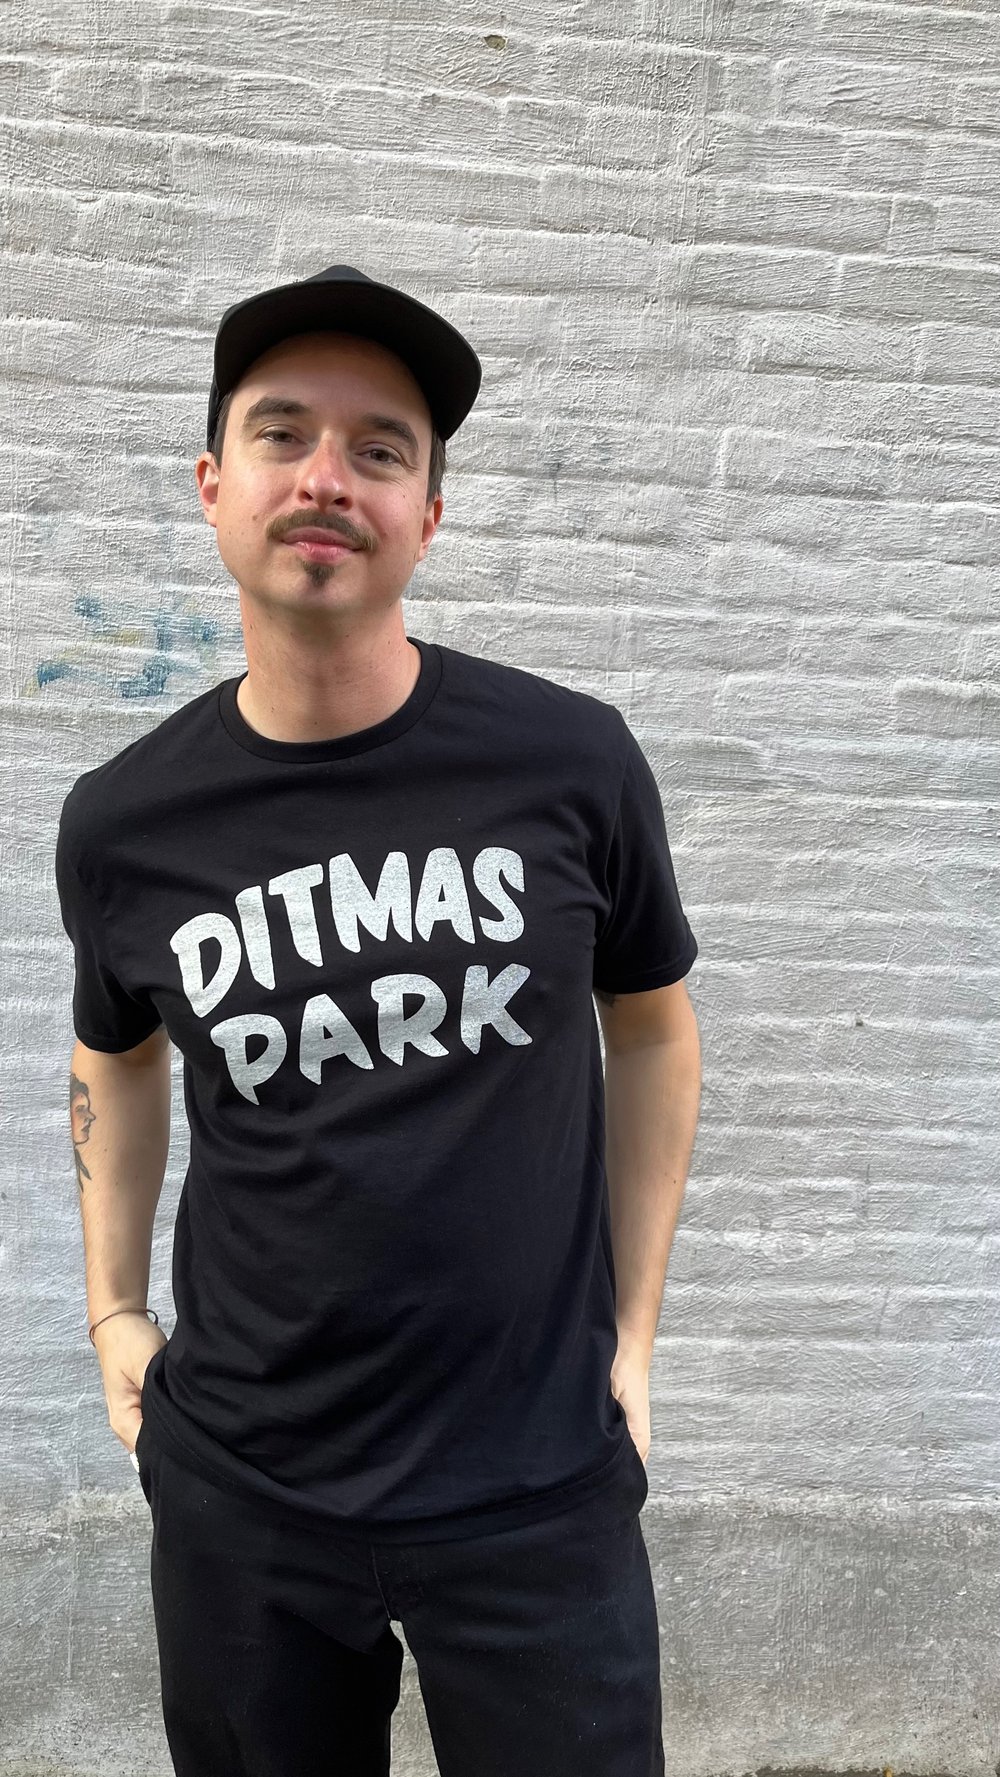 Ditmas Park Shirt